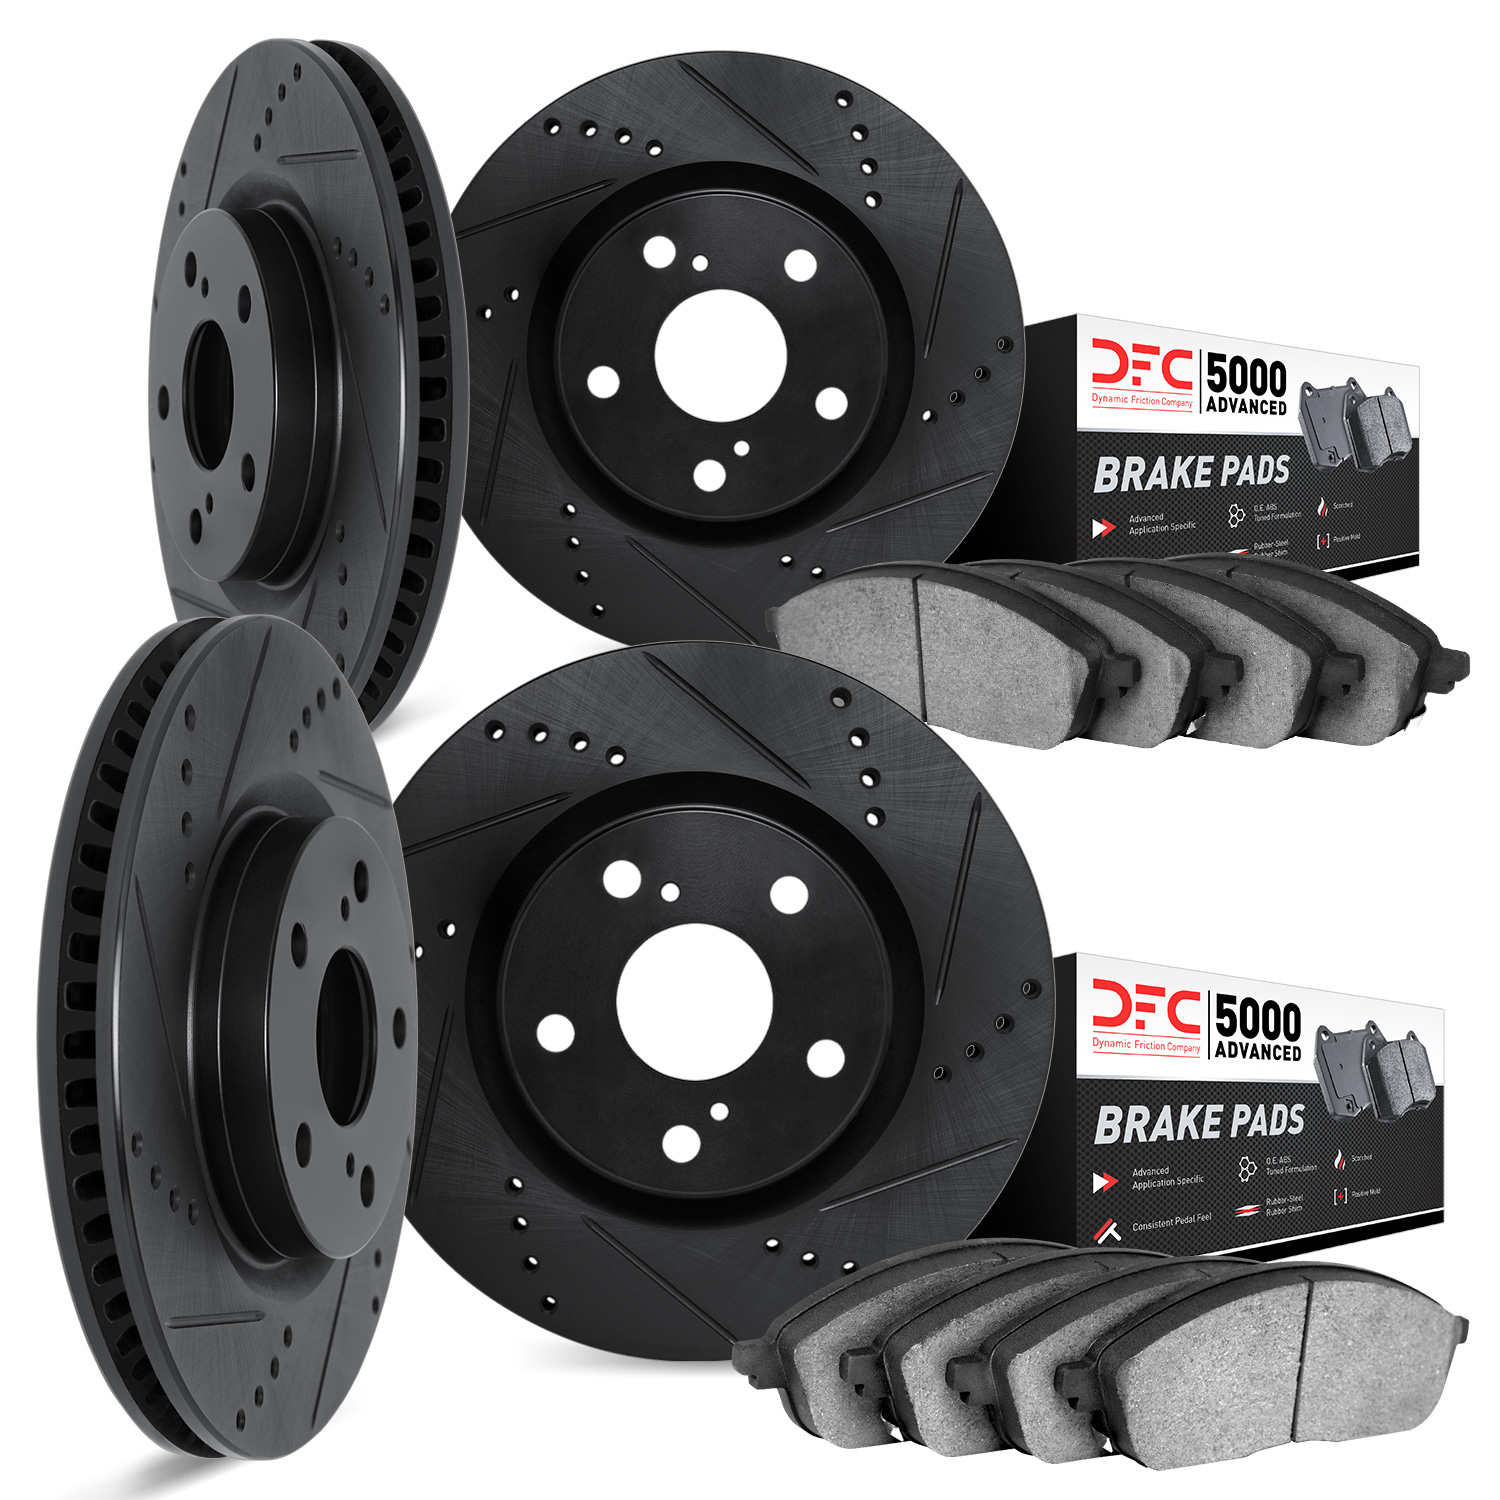 8504-40239 Drilled/Slotted Brake Rotors w/5000 Advanced Brake Pads Kit [Black], 2008-2012 Mopar, Position: Front and Rear